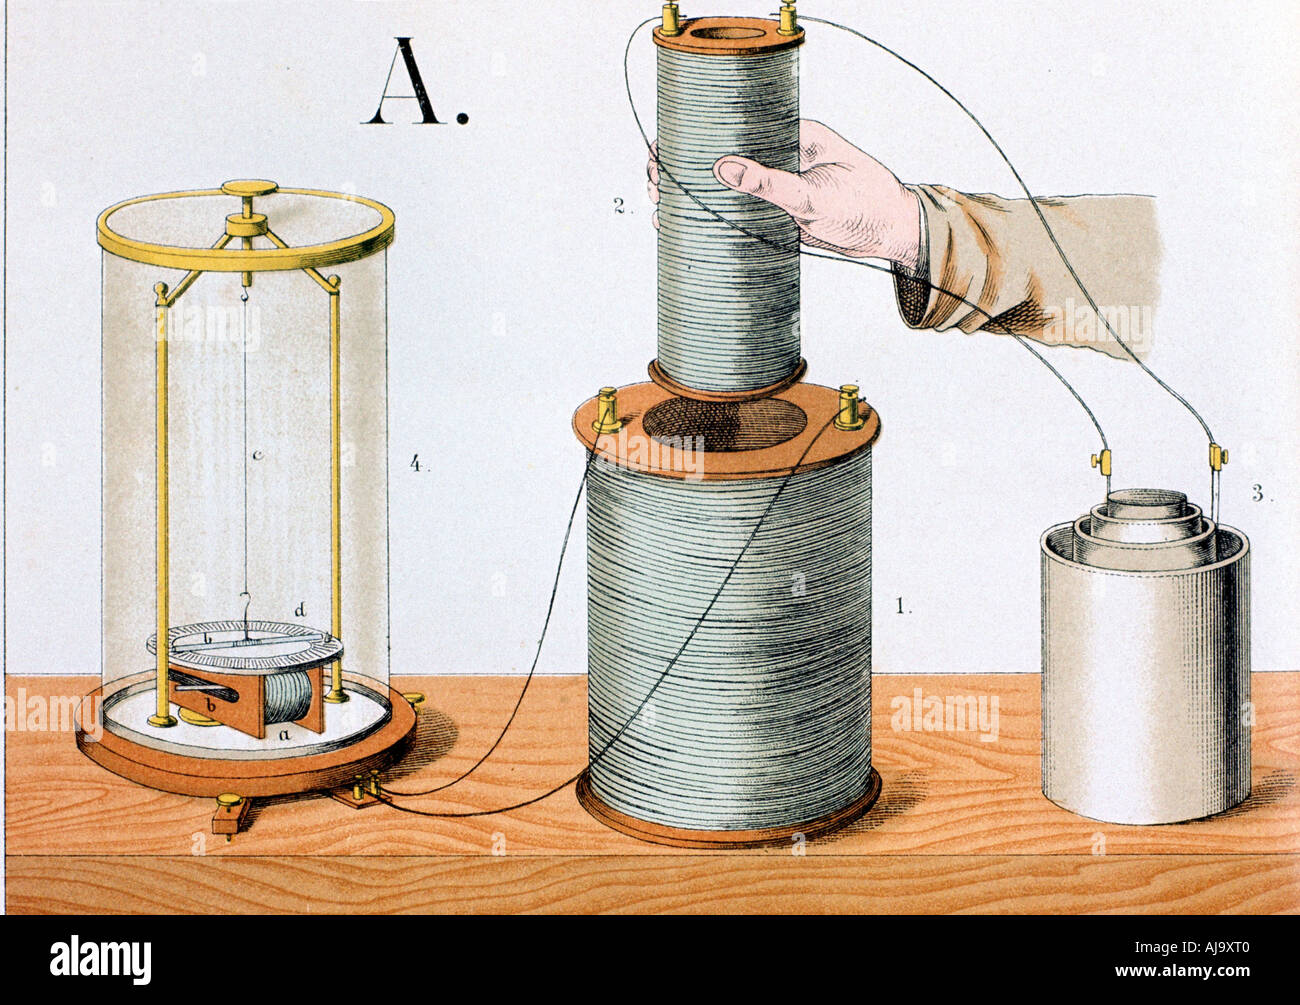 File:Faraday box.jpg - Wikimedia Commons